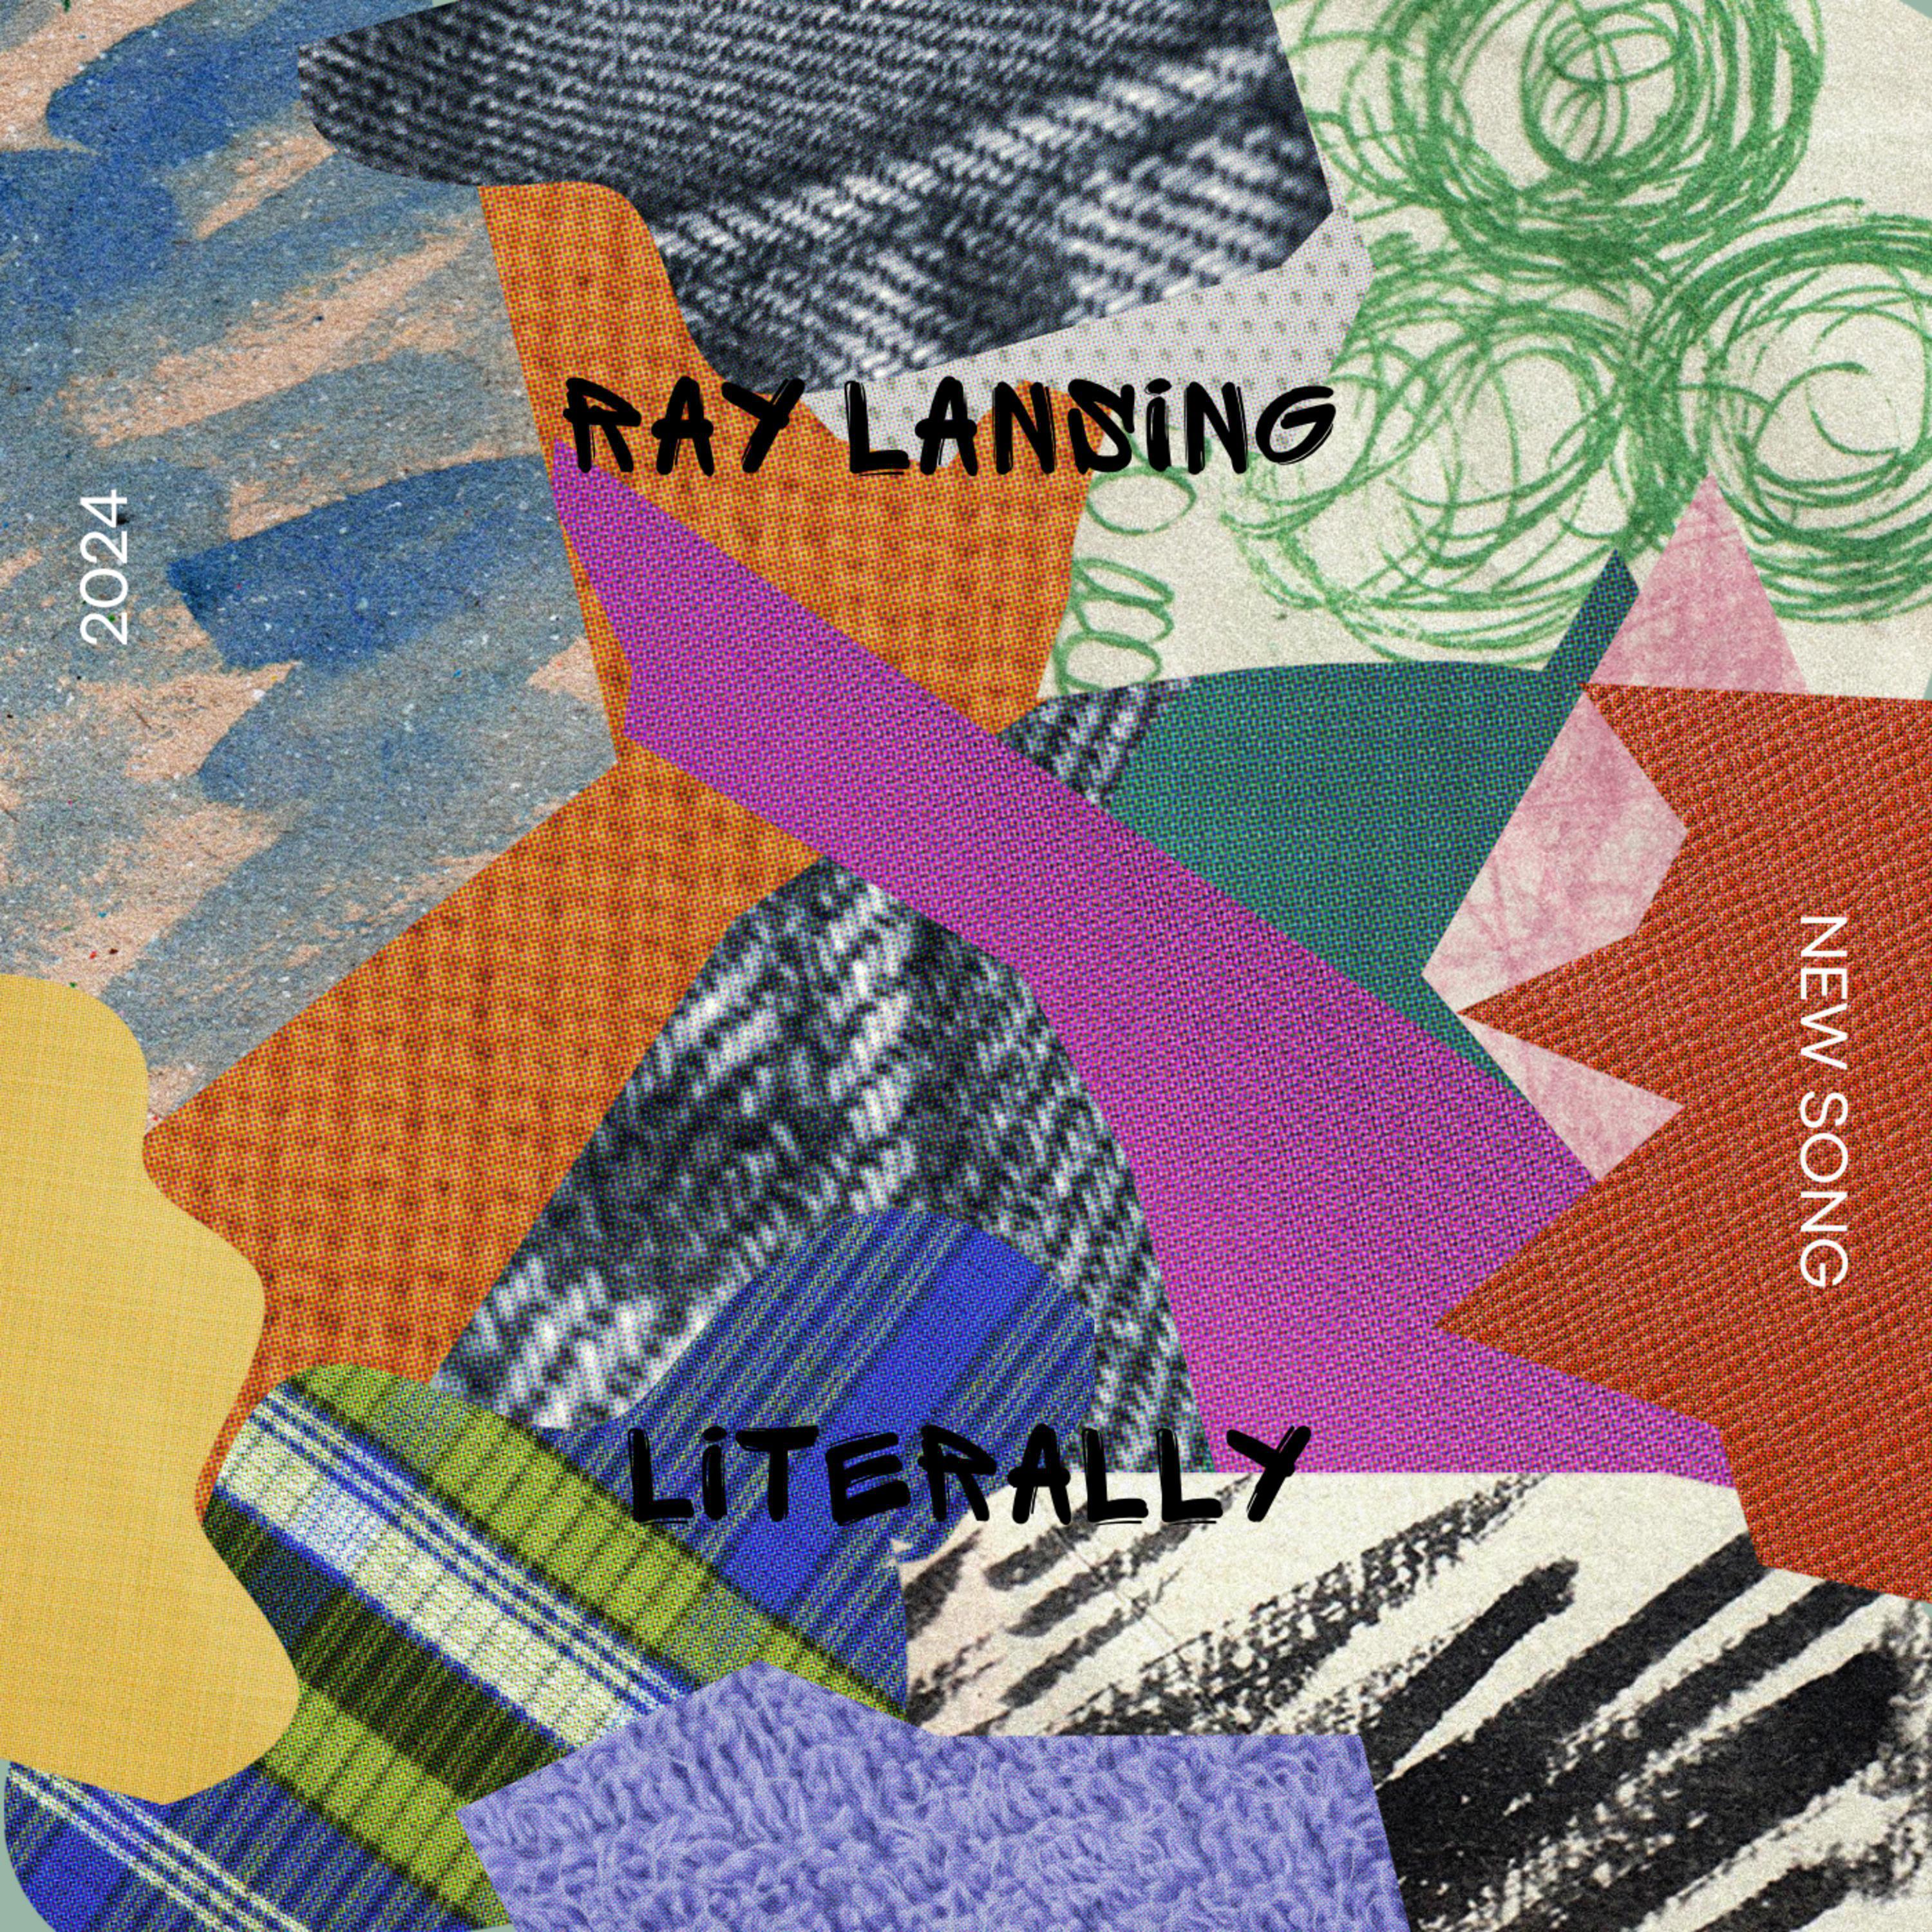 Ray Lansing - Literally! (feat. Sapjer)